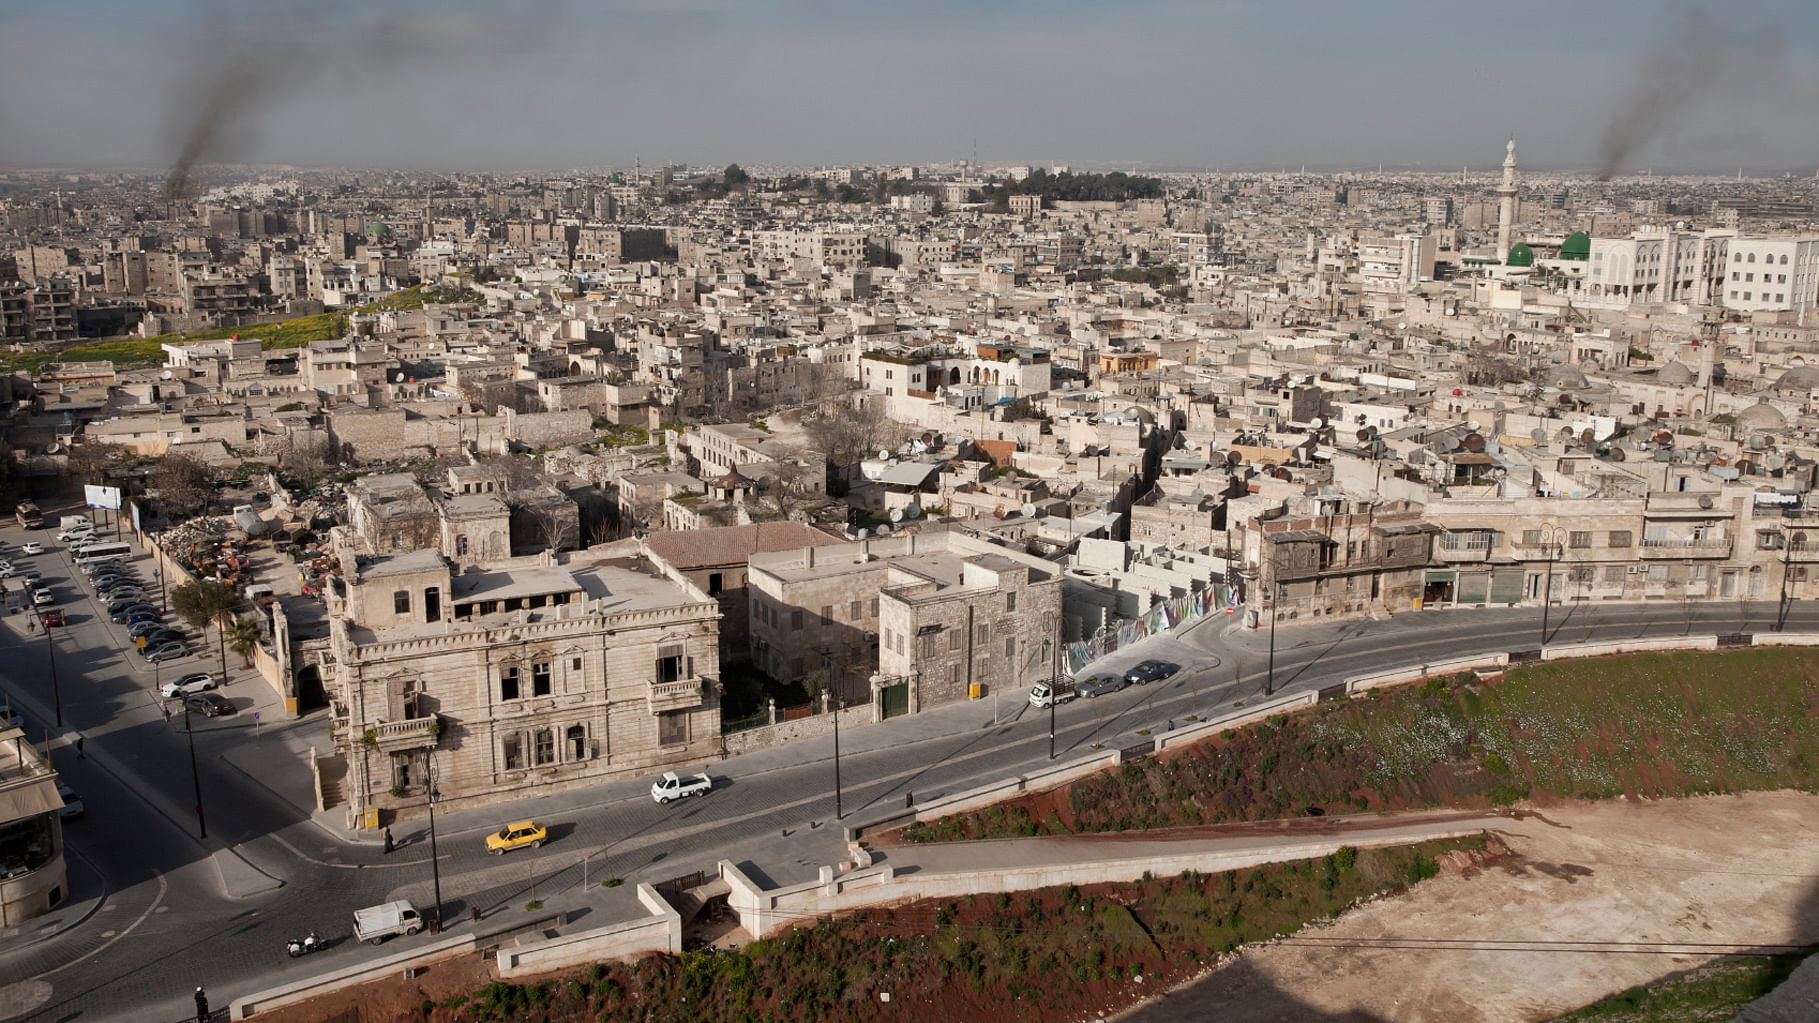 Aleppo City in Syria. (Photo: iStockphoto)